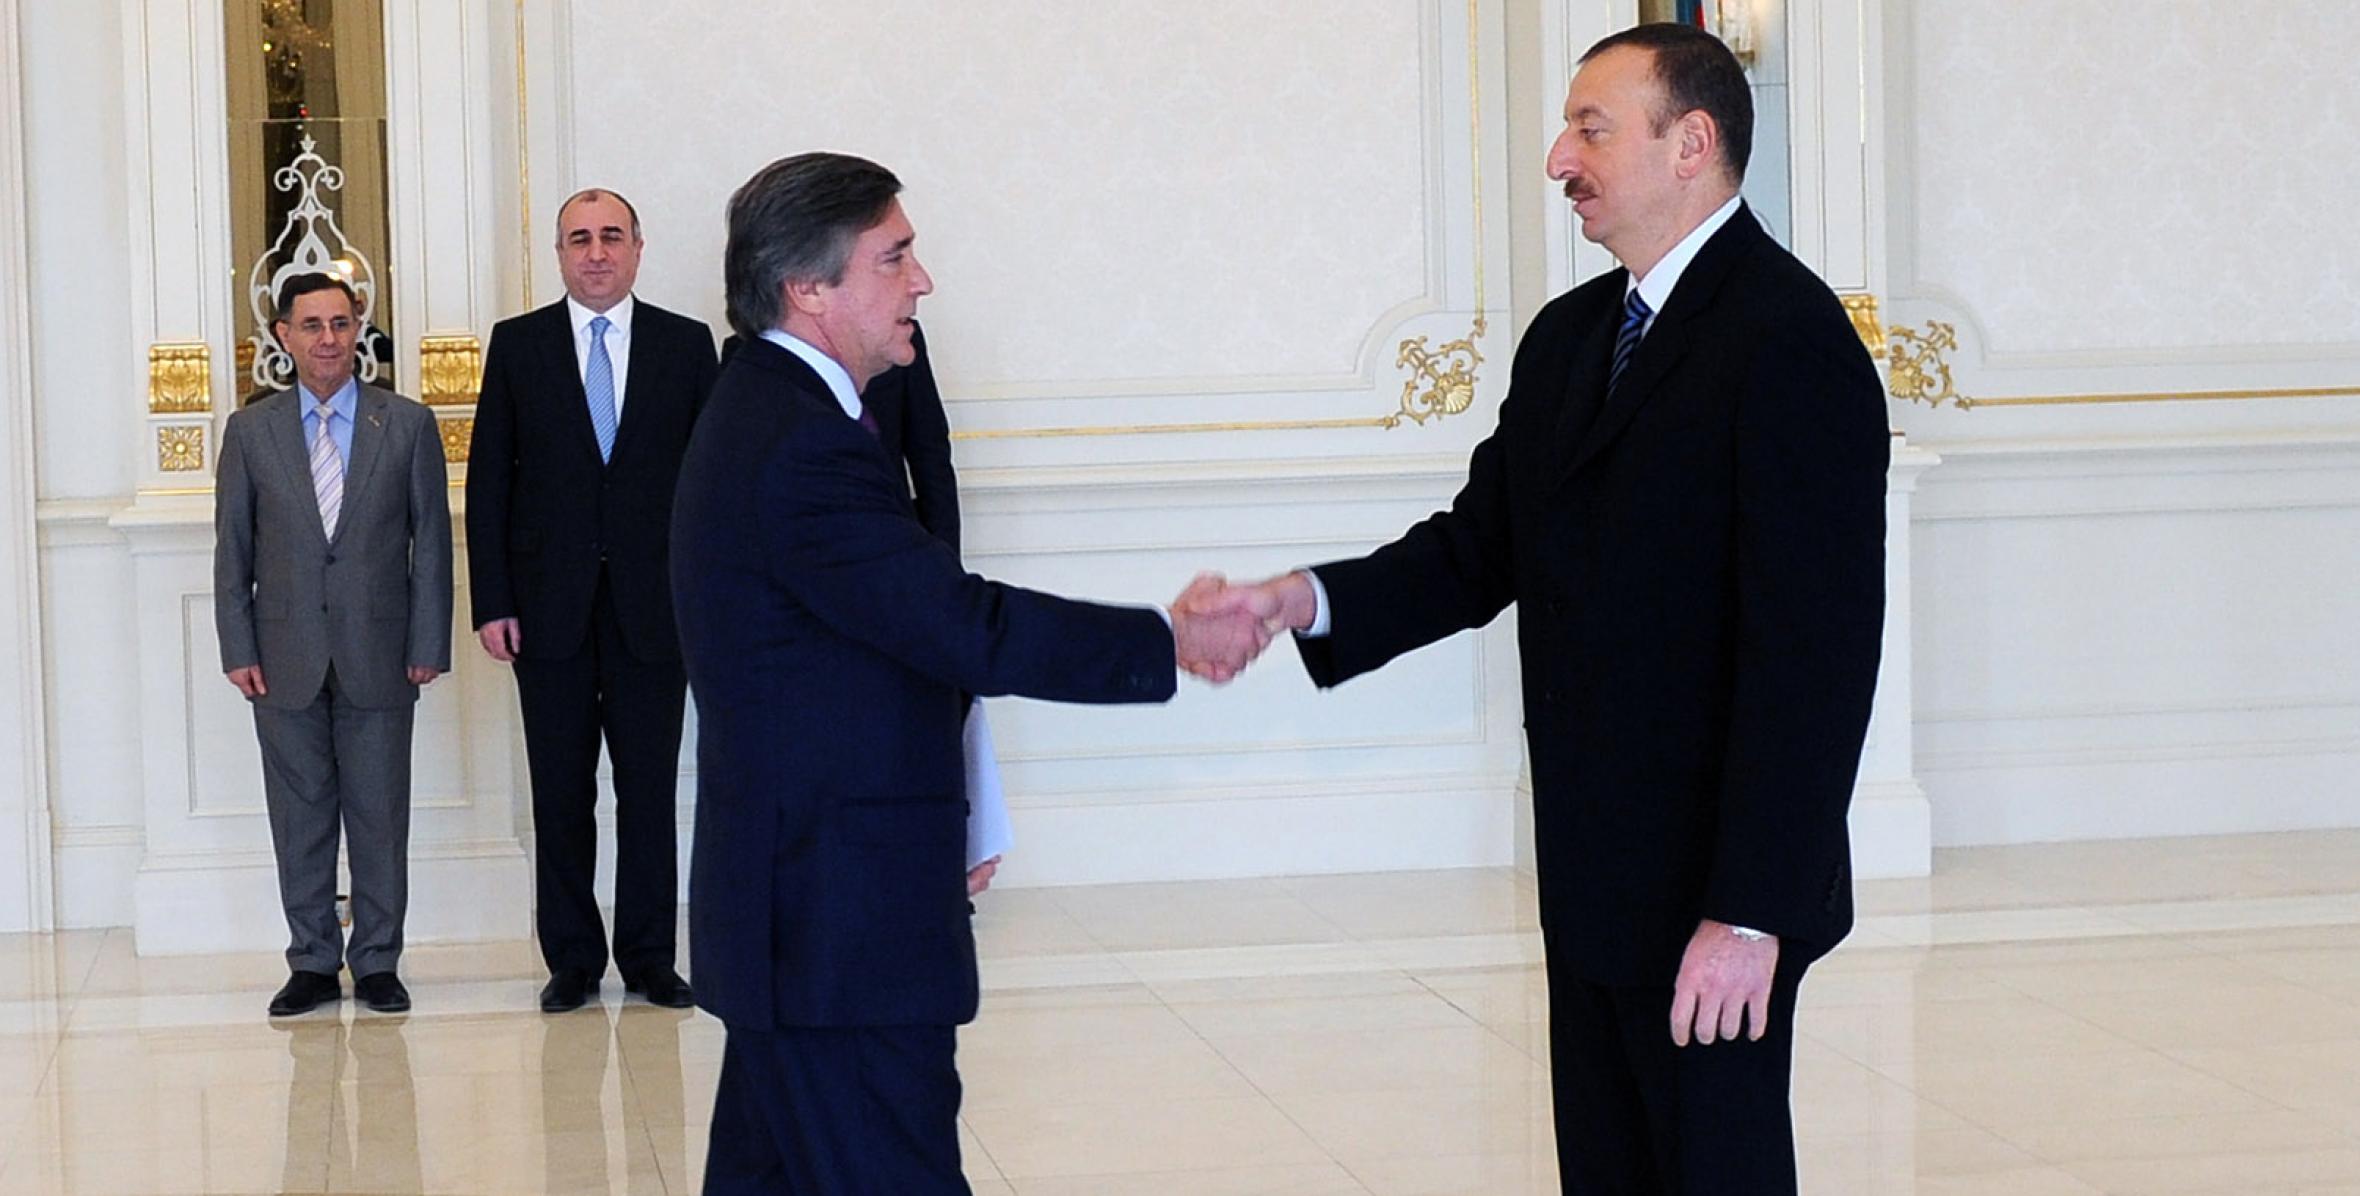 Ilham Aliyev received the credentials of a newly appointed Ambassador of Spain, Cristobal Gonzalez-Aller Jurado